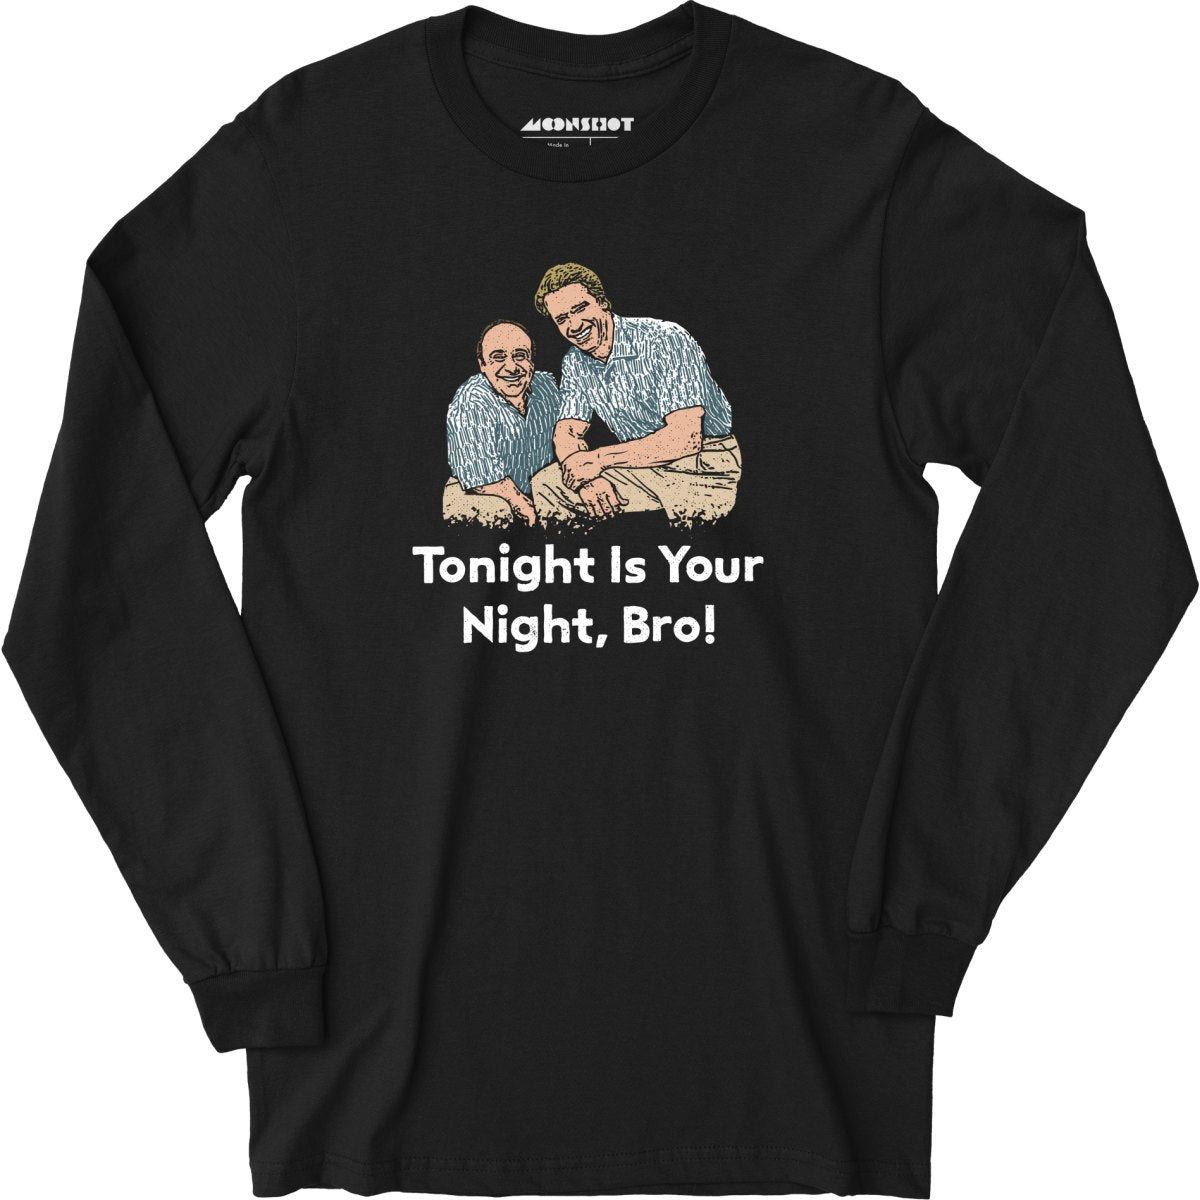 Tonight is Your Night, Bro! - Long Sleeve T-Shirt